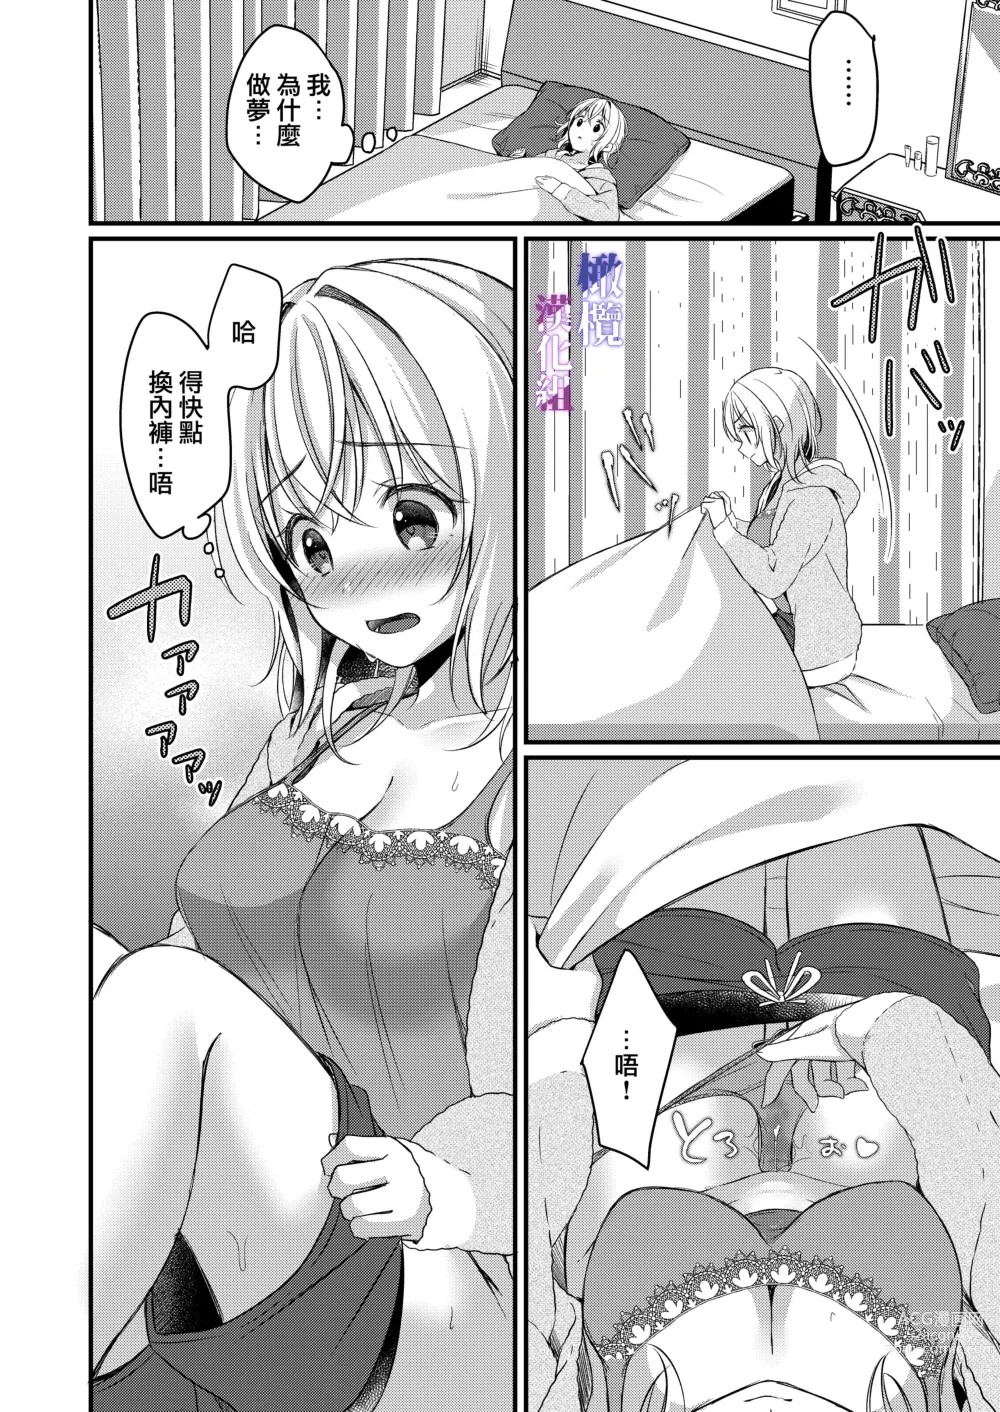 Page 13 of doujinshi 梦见了与叔叔淫乱的梦